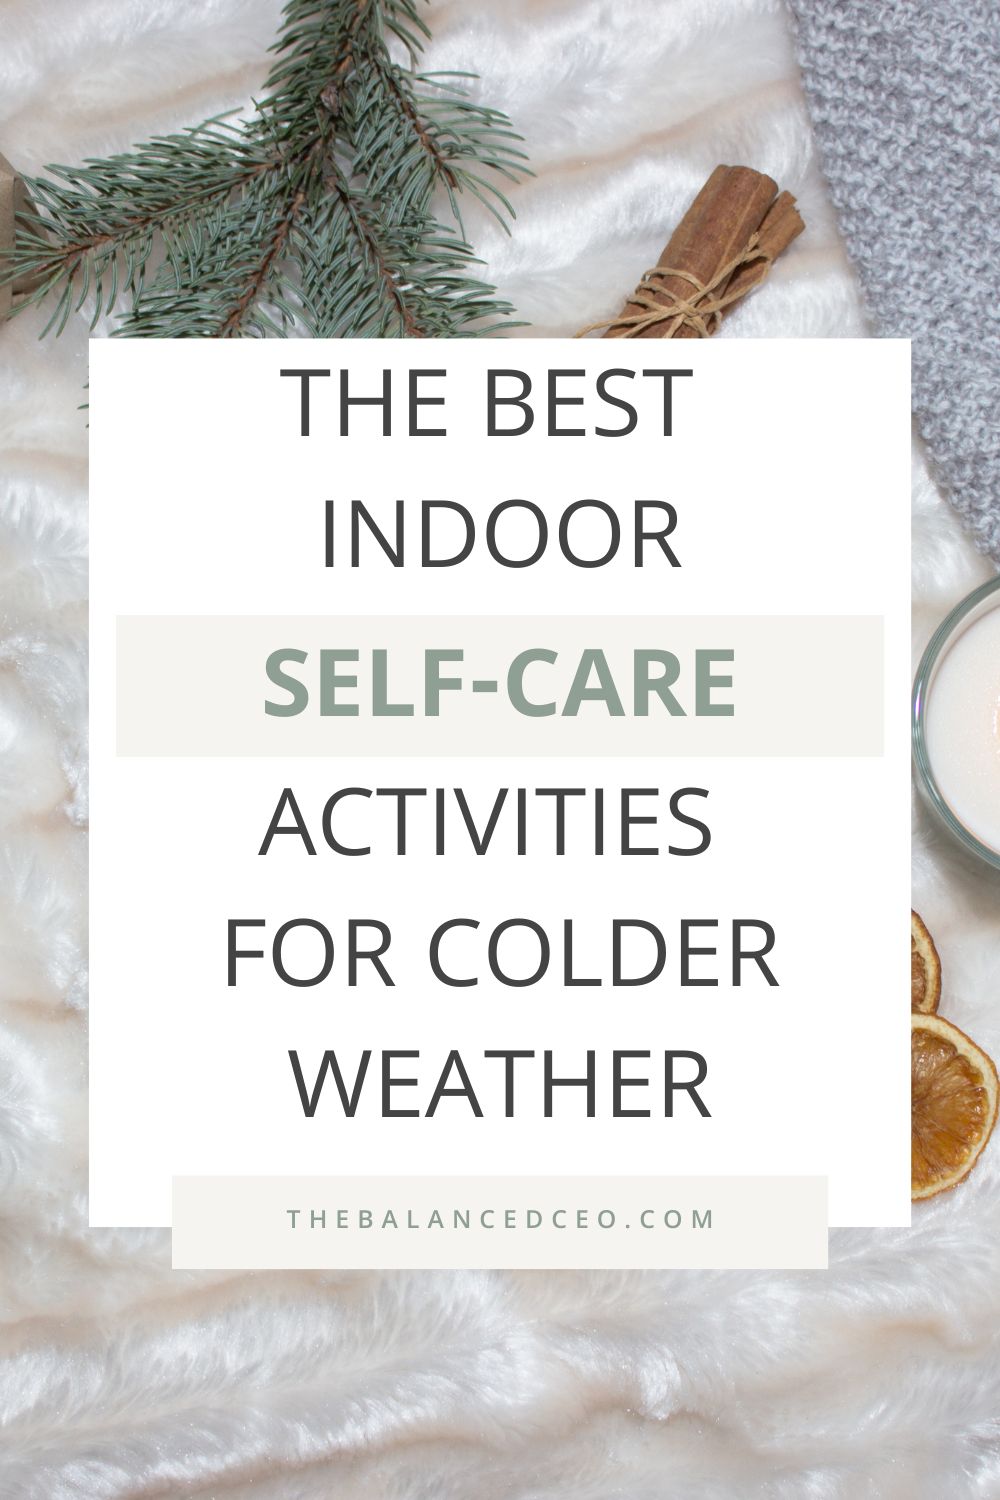 The Best Indoor Self-Care Activities For Colder Weather